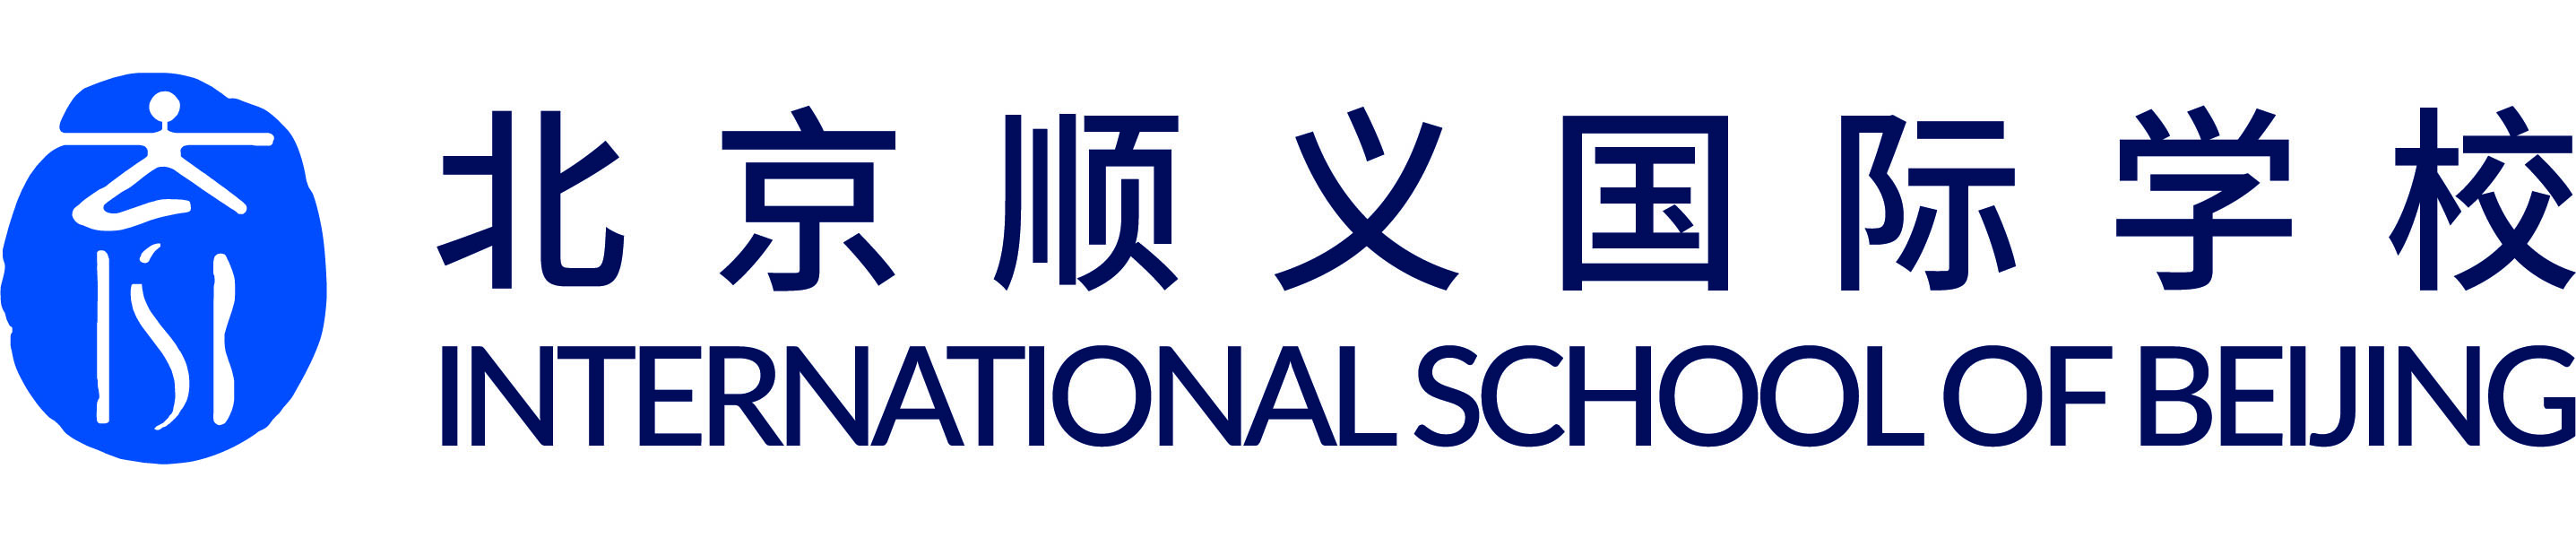 International School of Beijing Logo